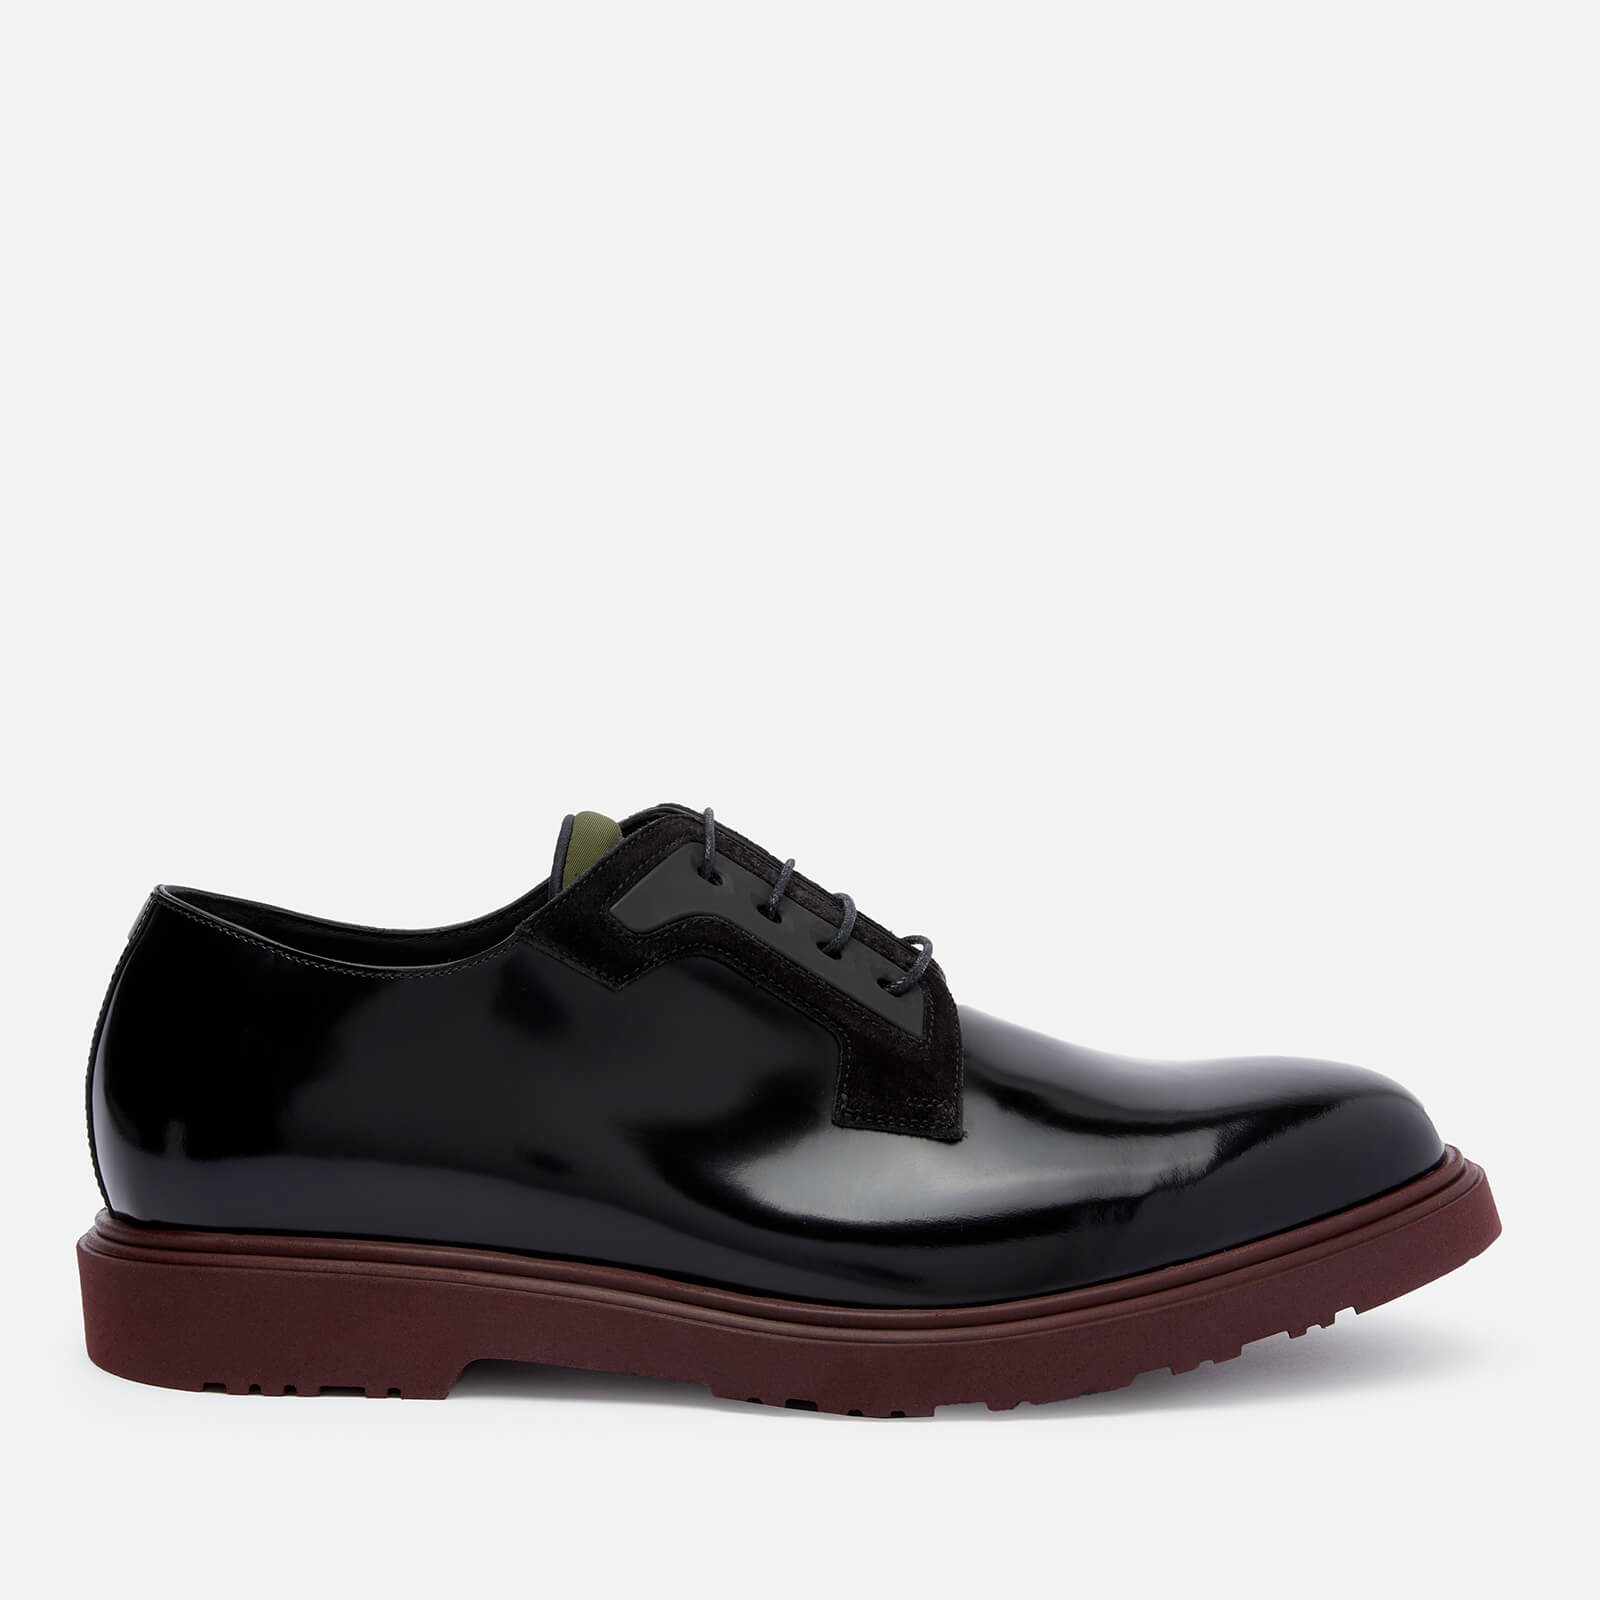 Paul Smith Men's Mac Leather Derby Shoes - Black - UK 10